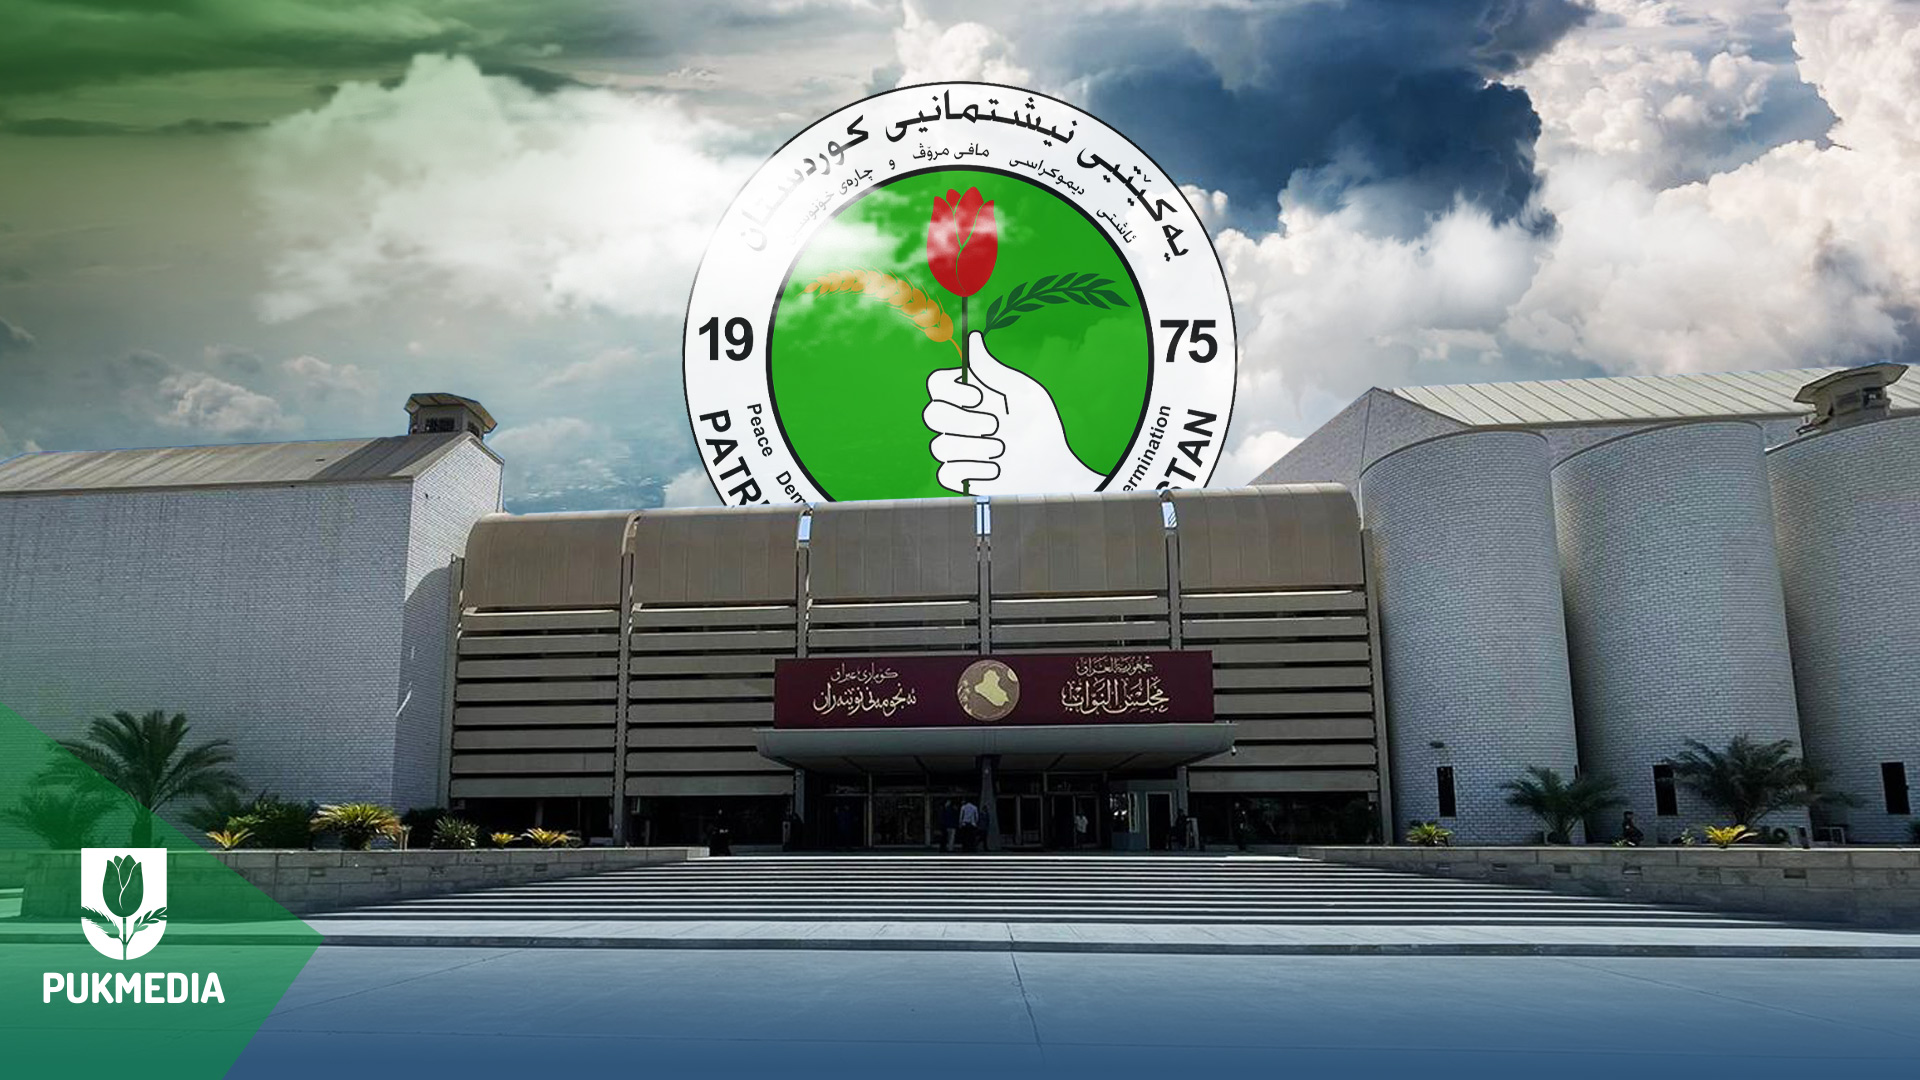  PUK logo and Iraqi Parliament.